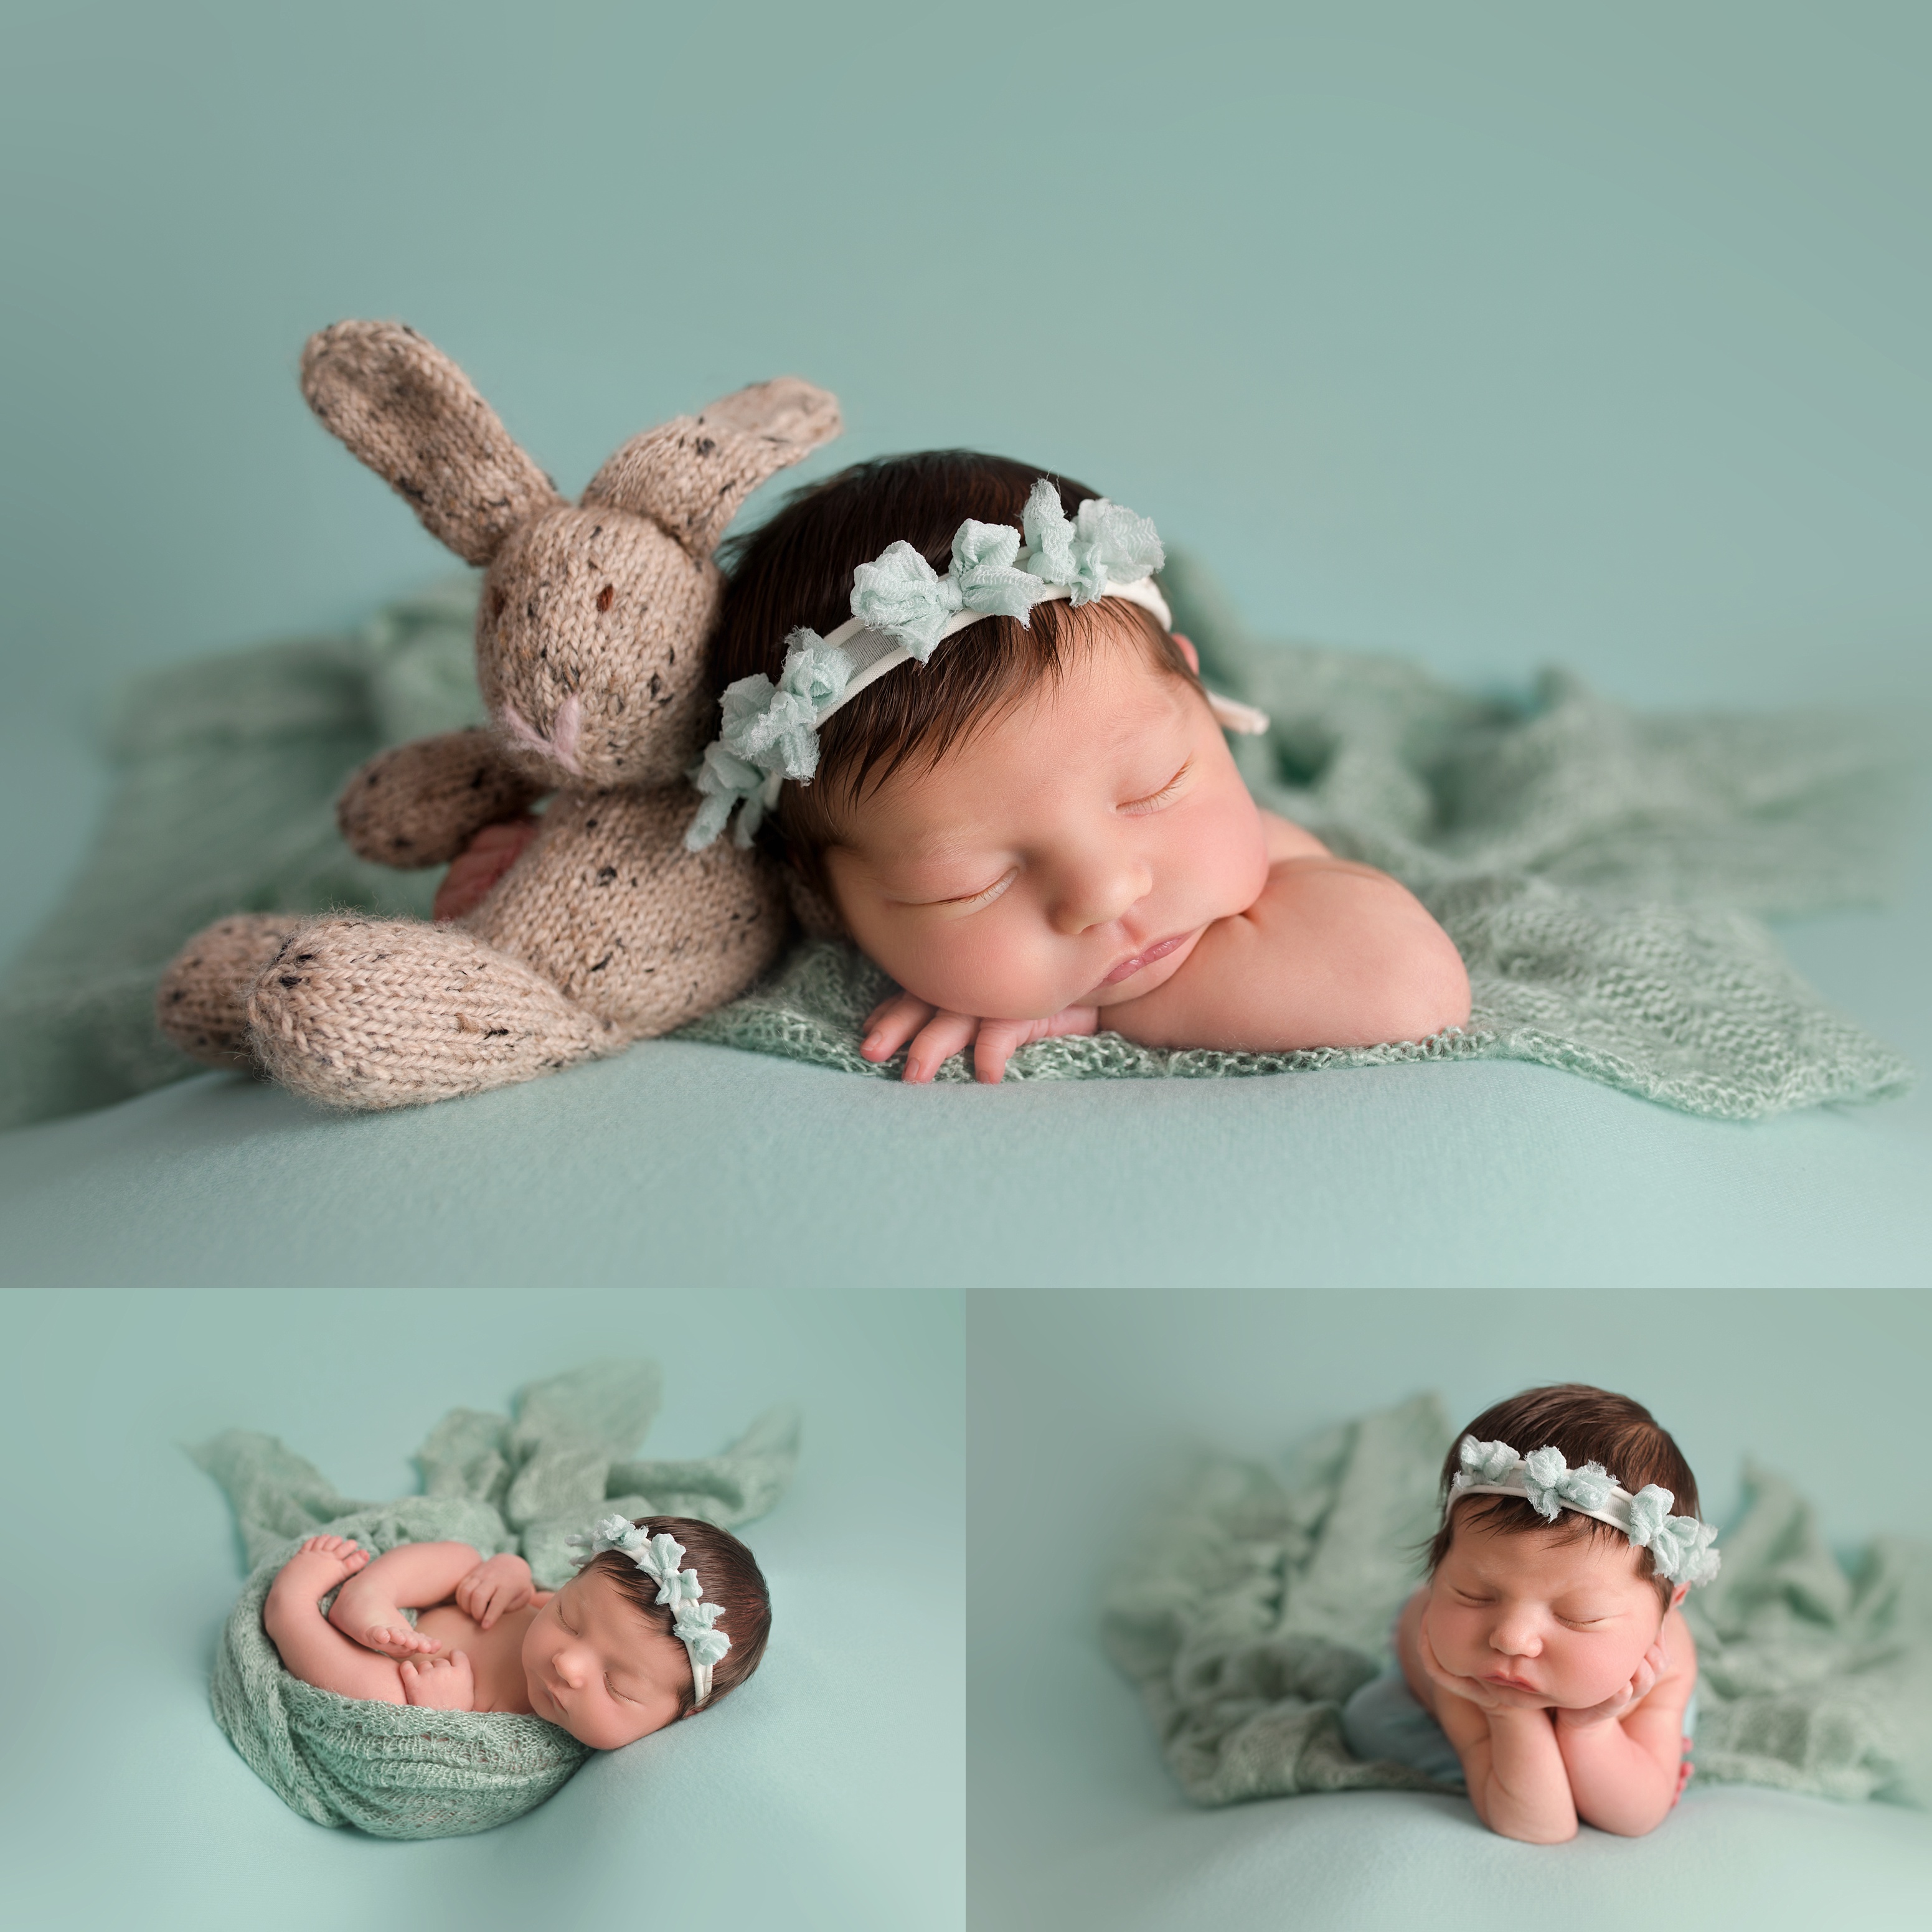 15 Best Newborn Photography Ideas at Home